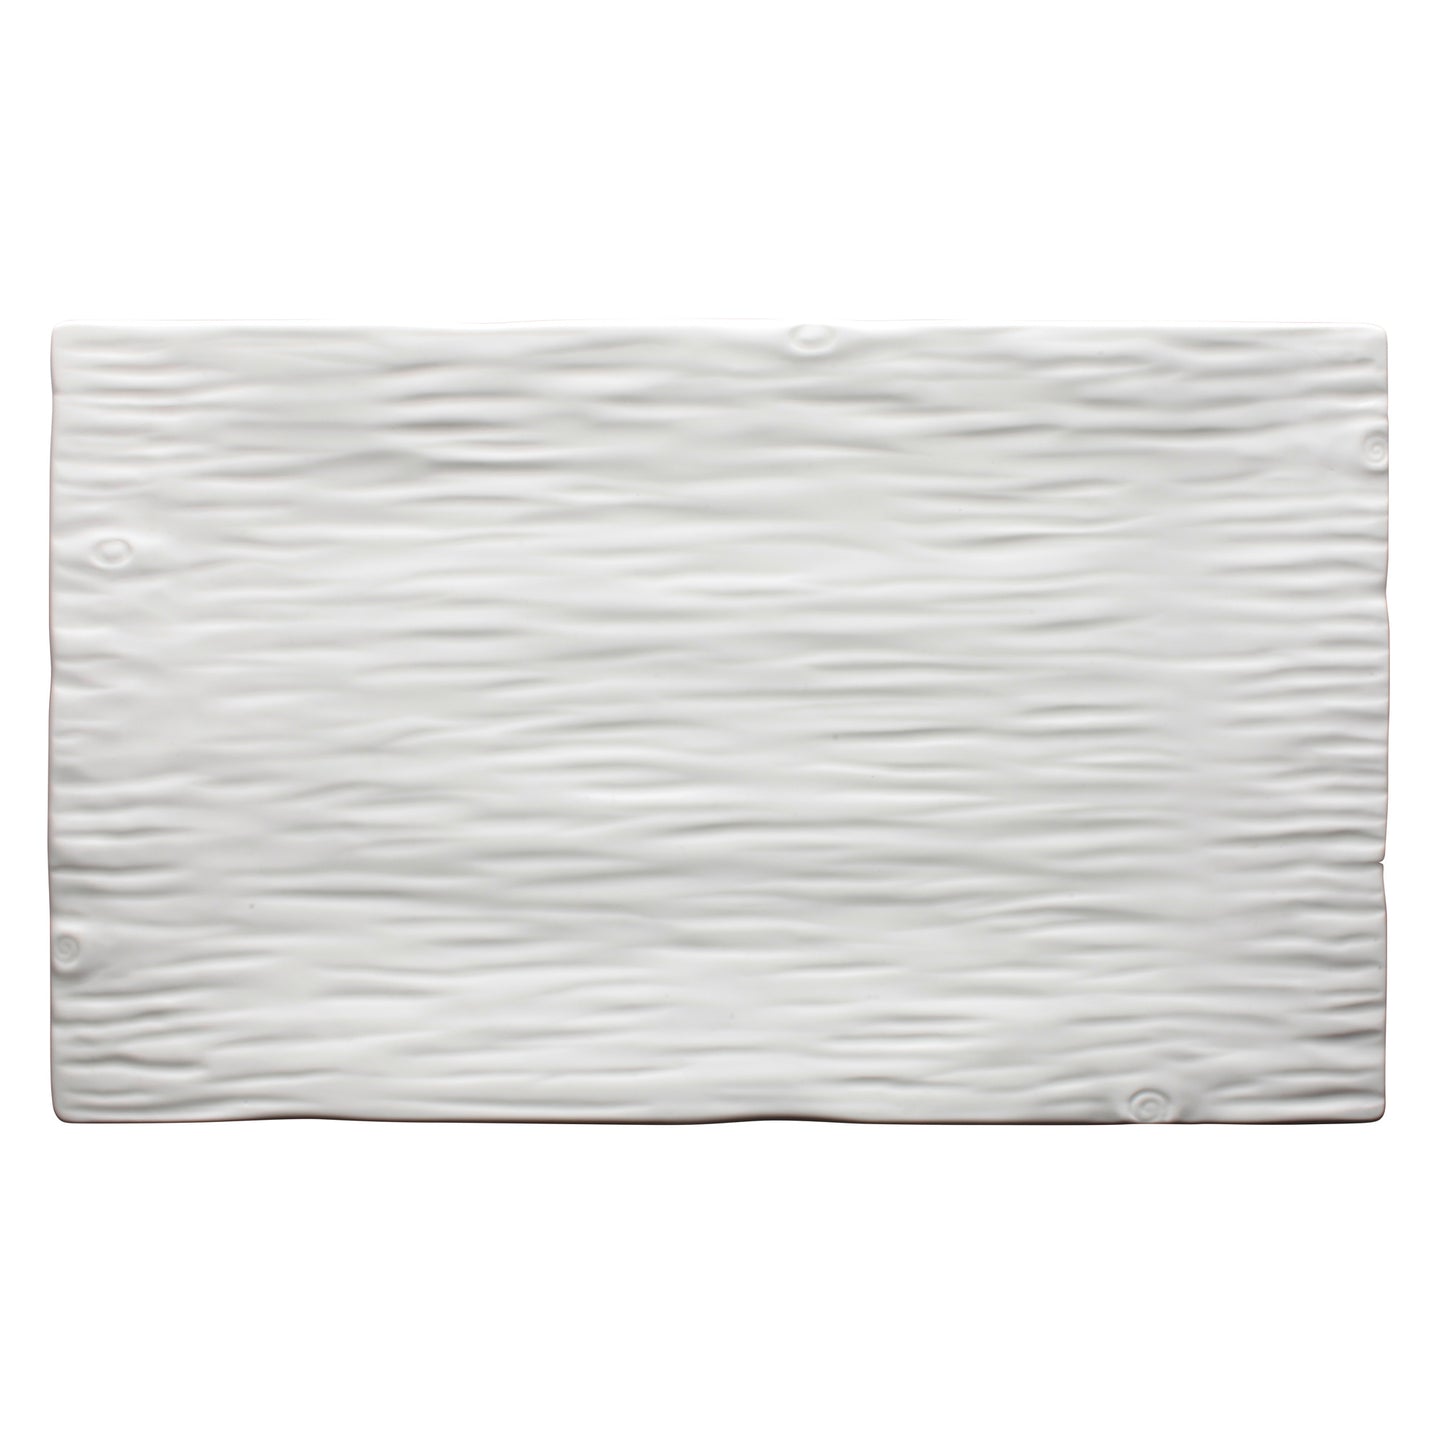 WDP002-203 - Dalmata Porcelain Rectangular Platter, Creamy White - 15-3/4"